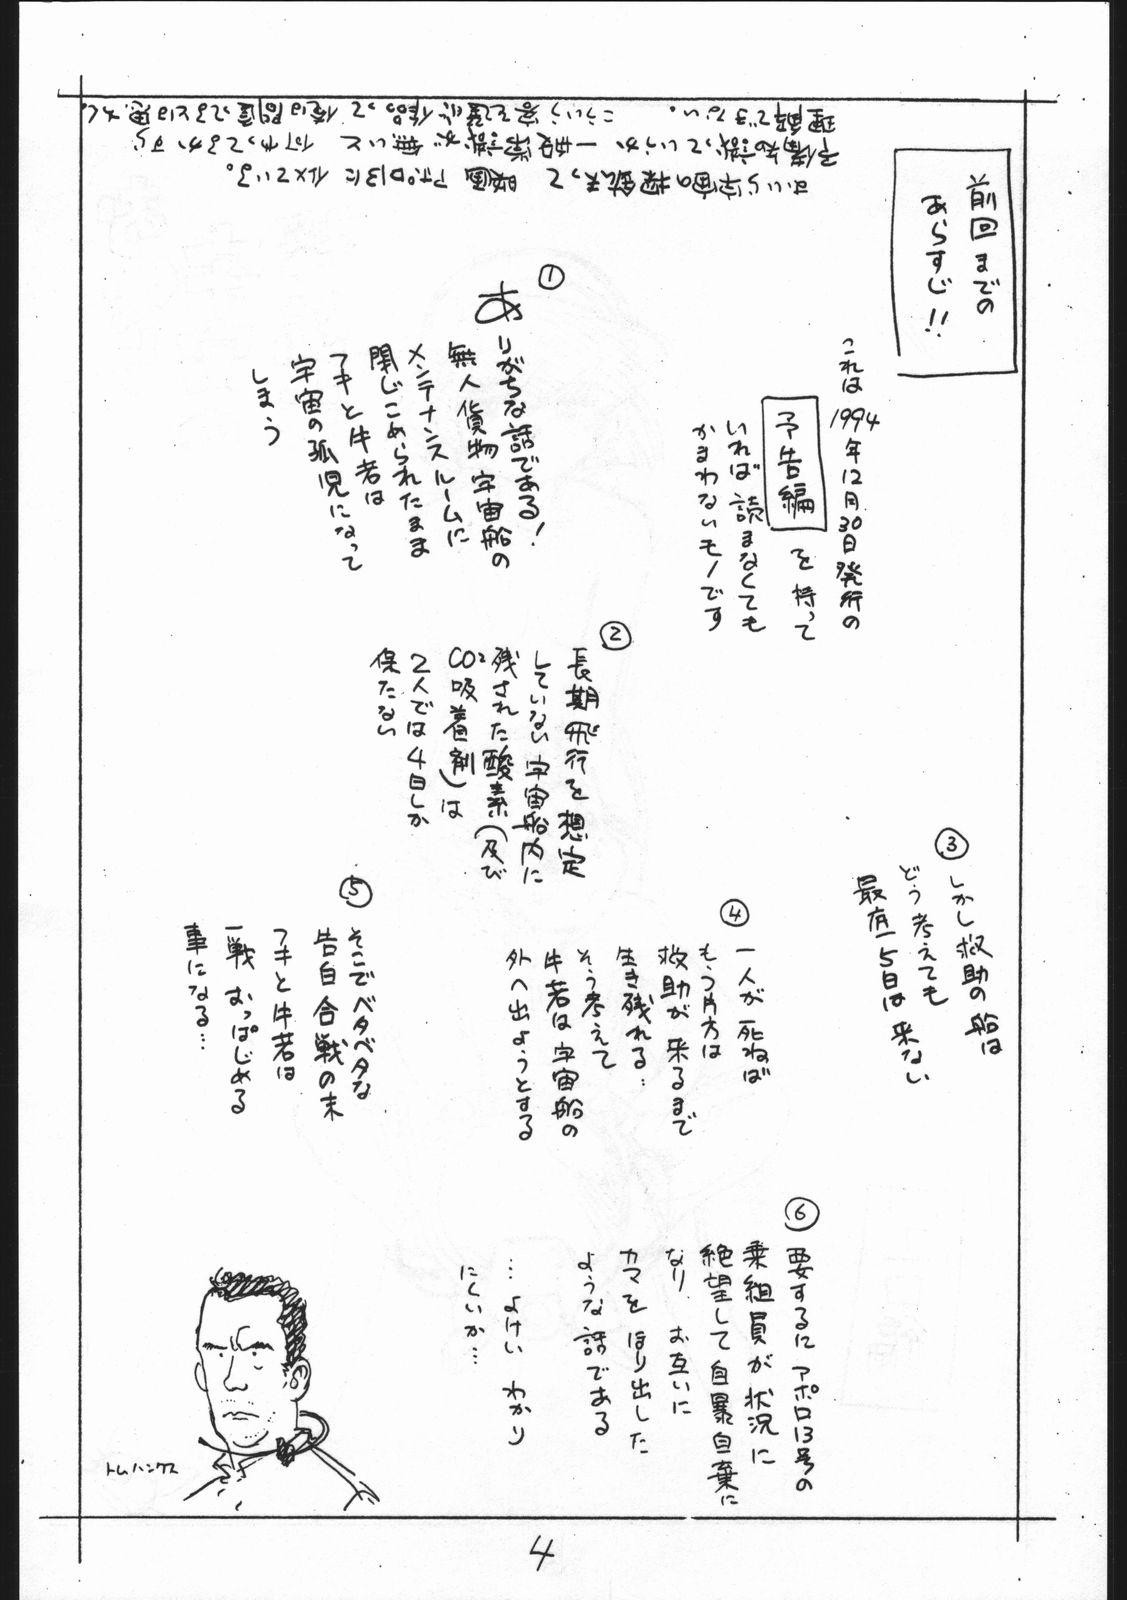 Footjob Enpitsu Egaki H Manga Vol. 3 - Yamato takeru Hotporn - Page 4